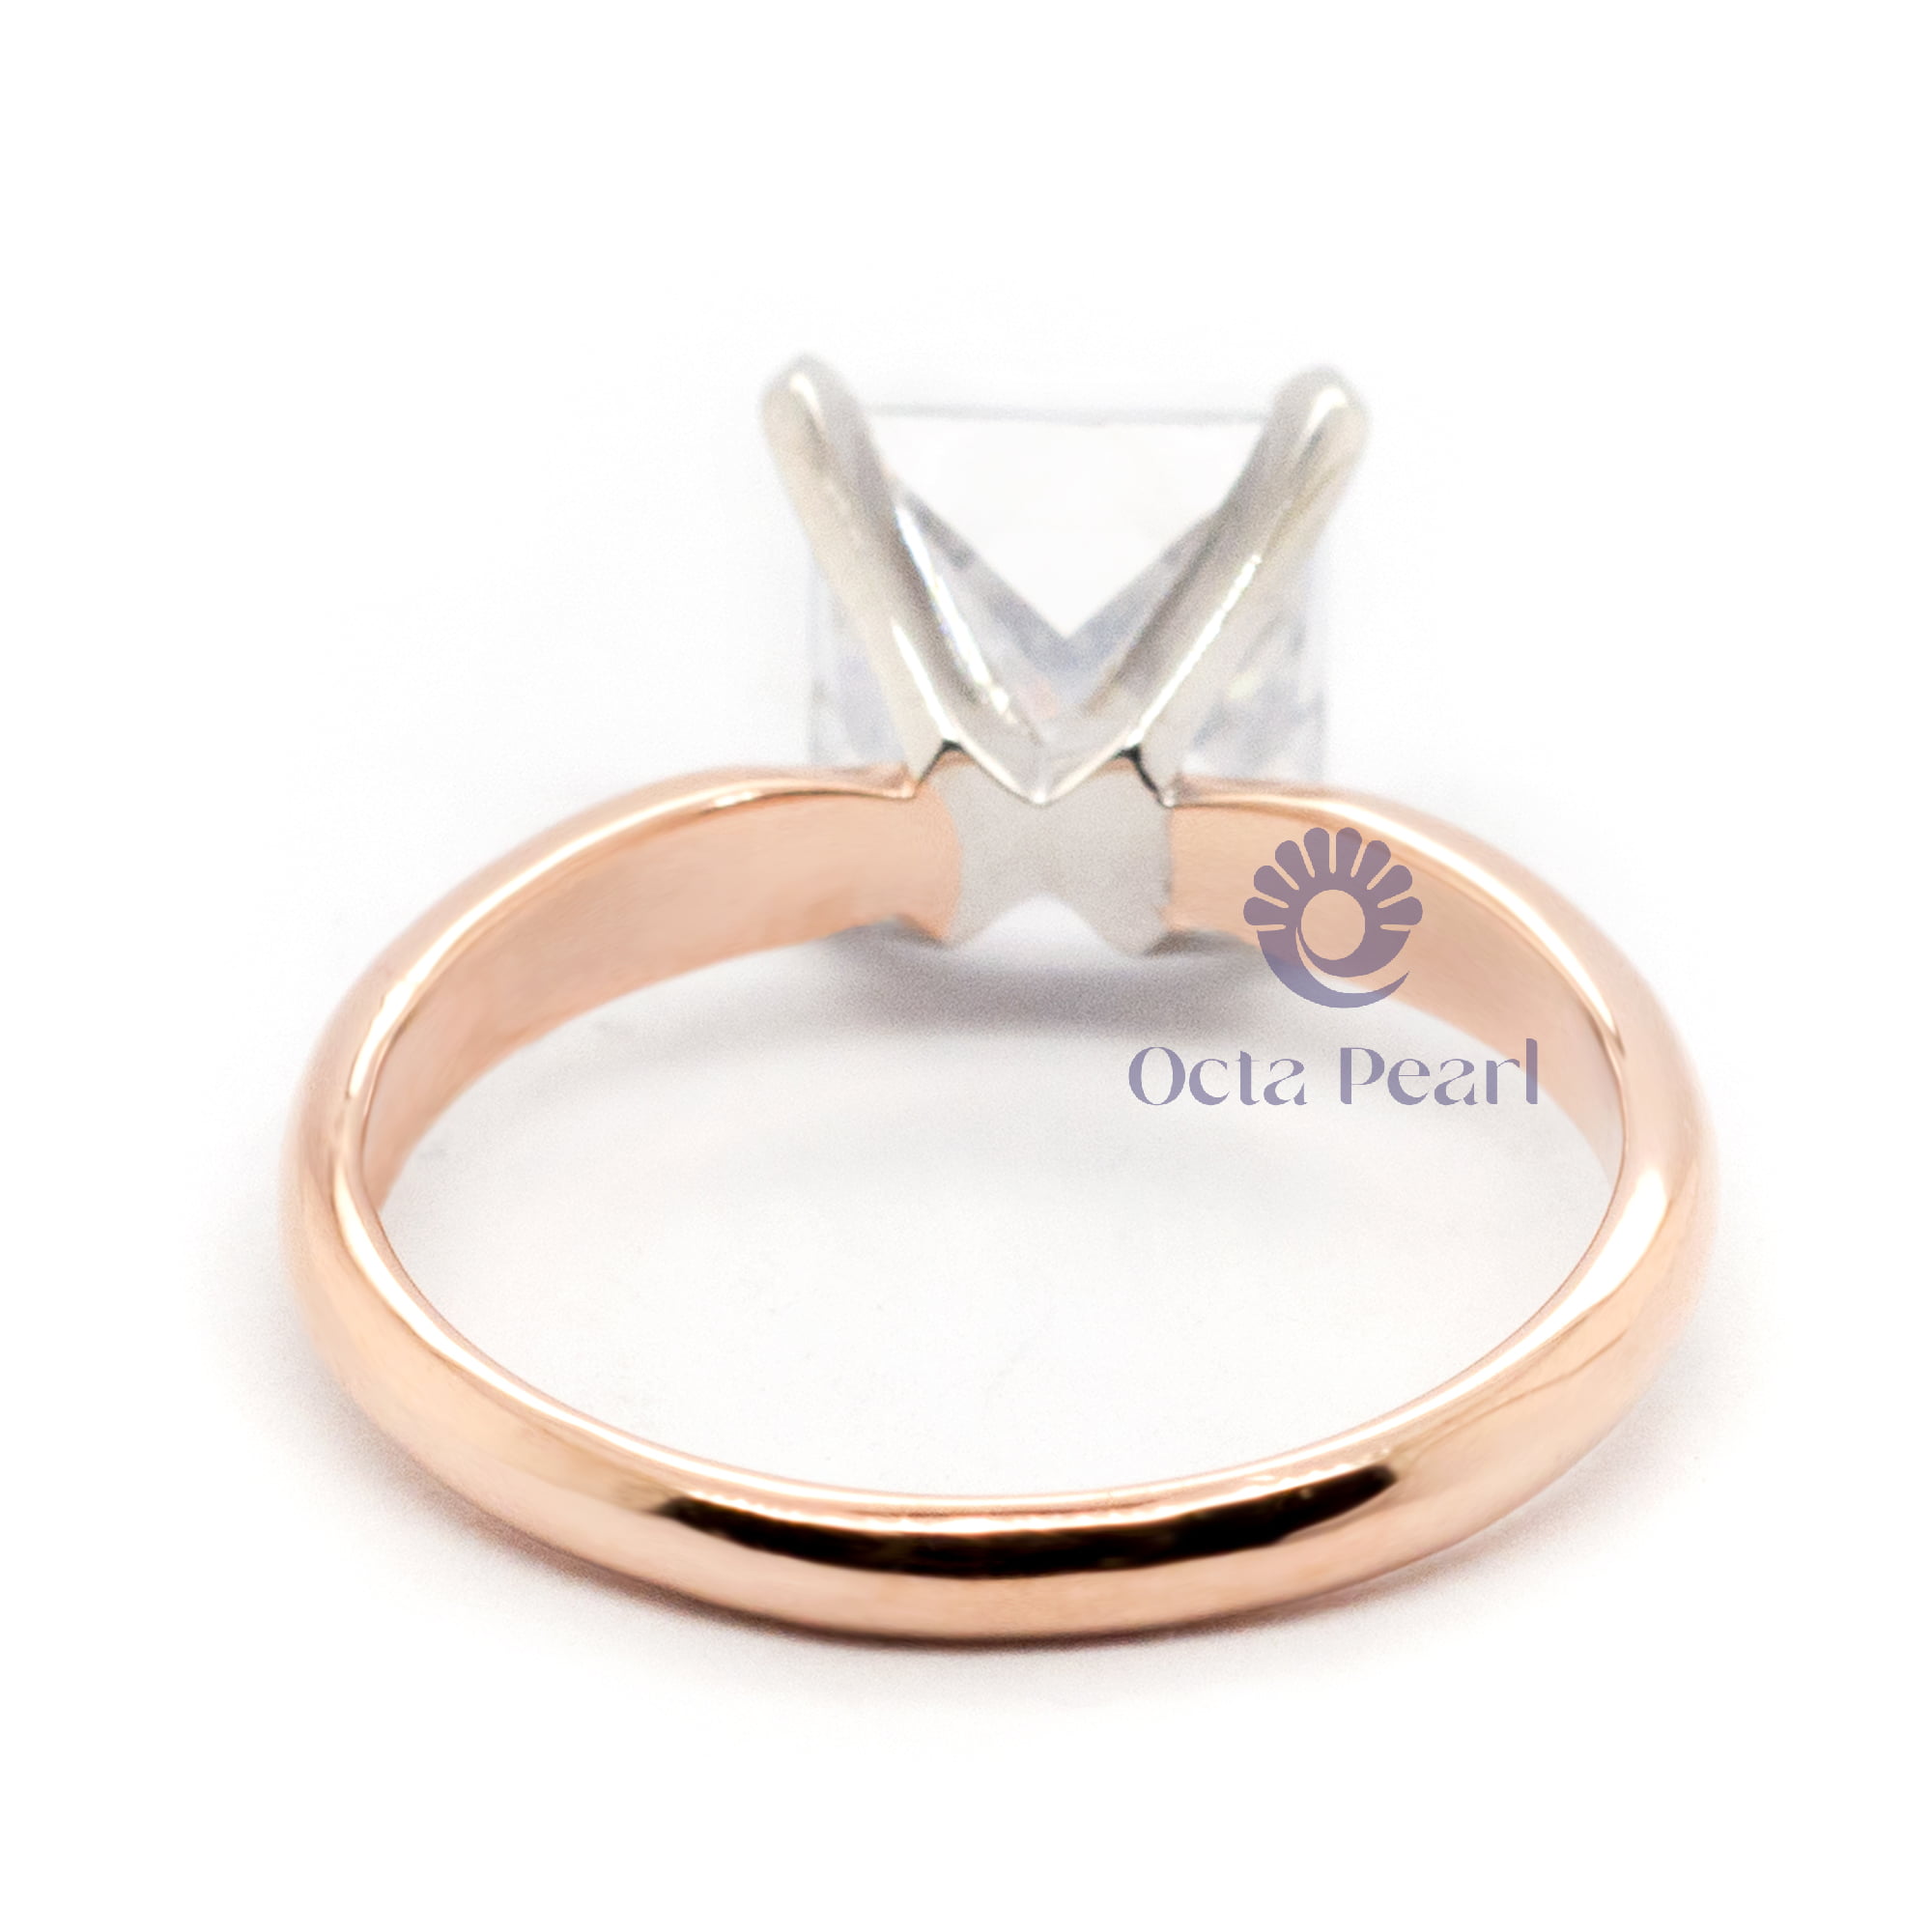 Halo Wedding Ring